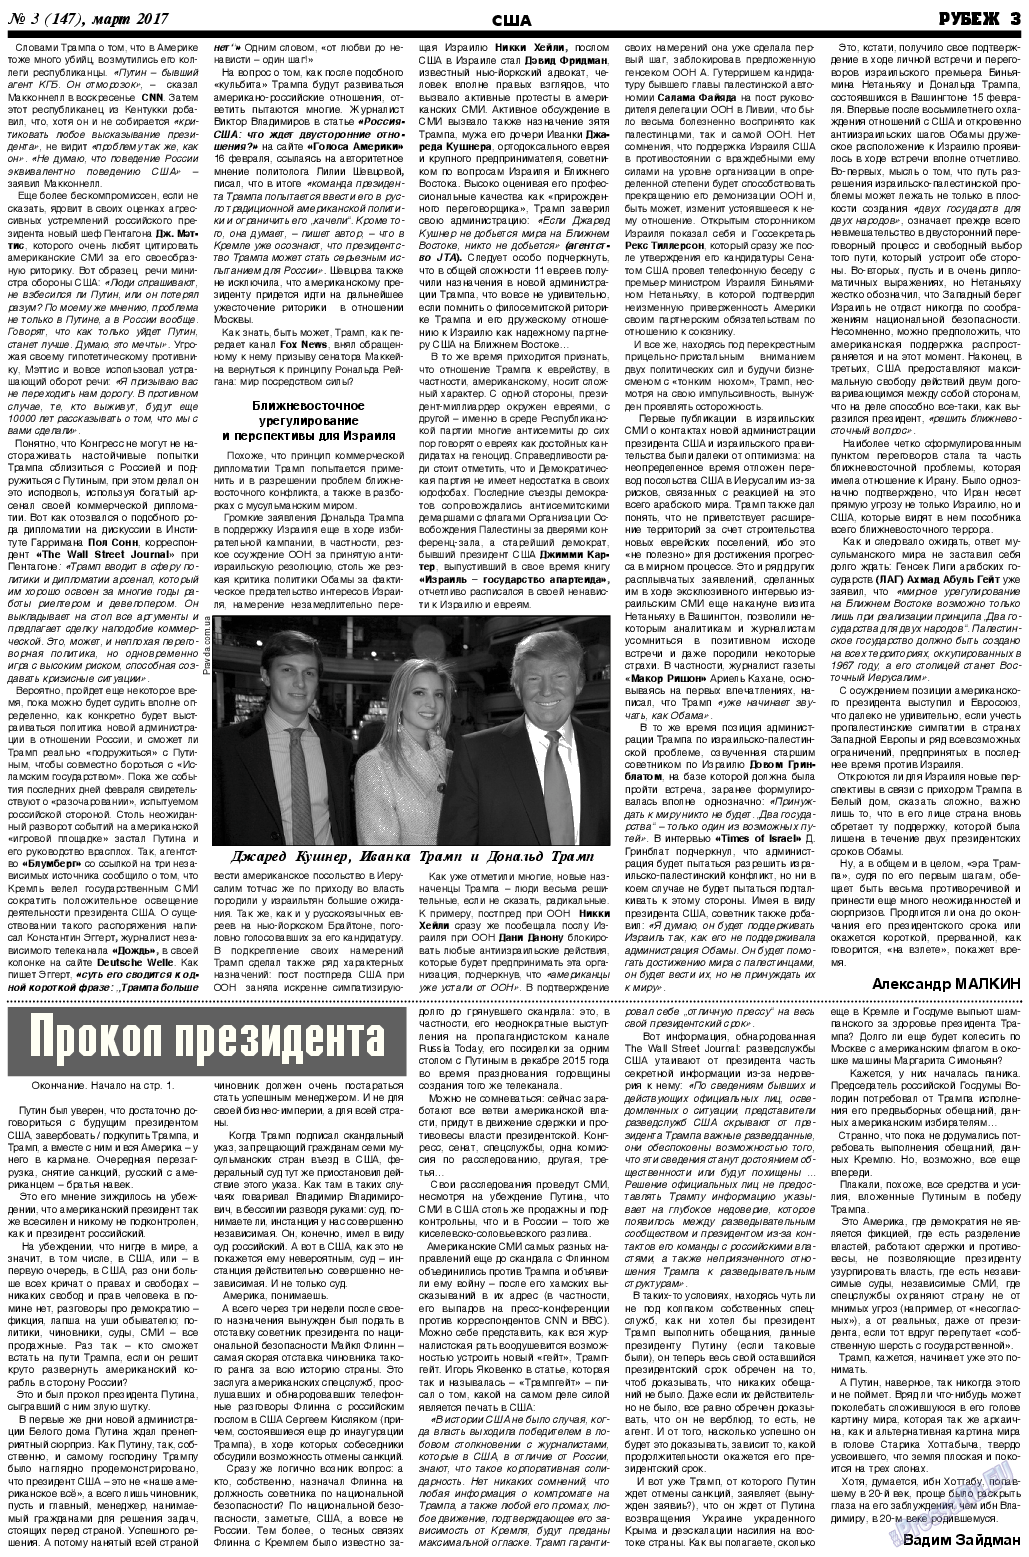 Рубеж, газета. 2017 №3 стр.3